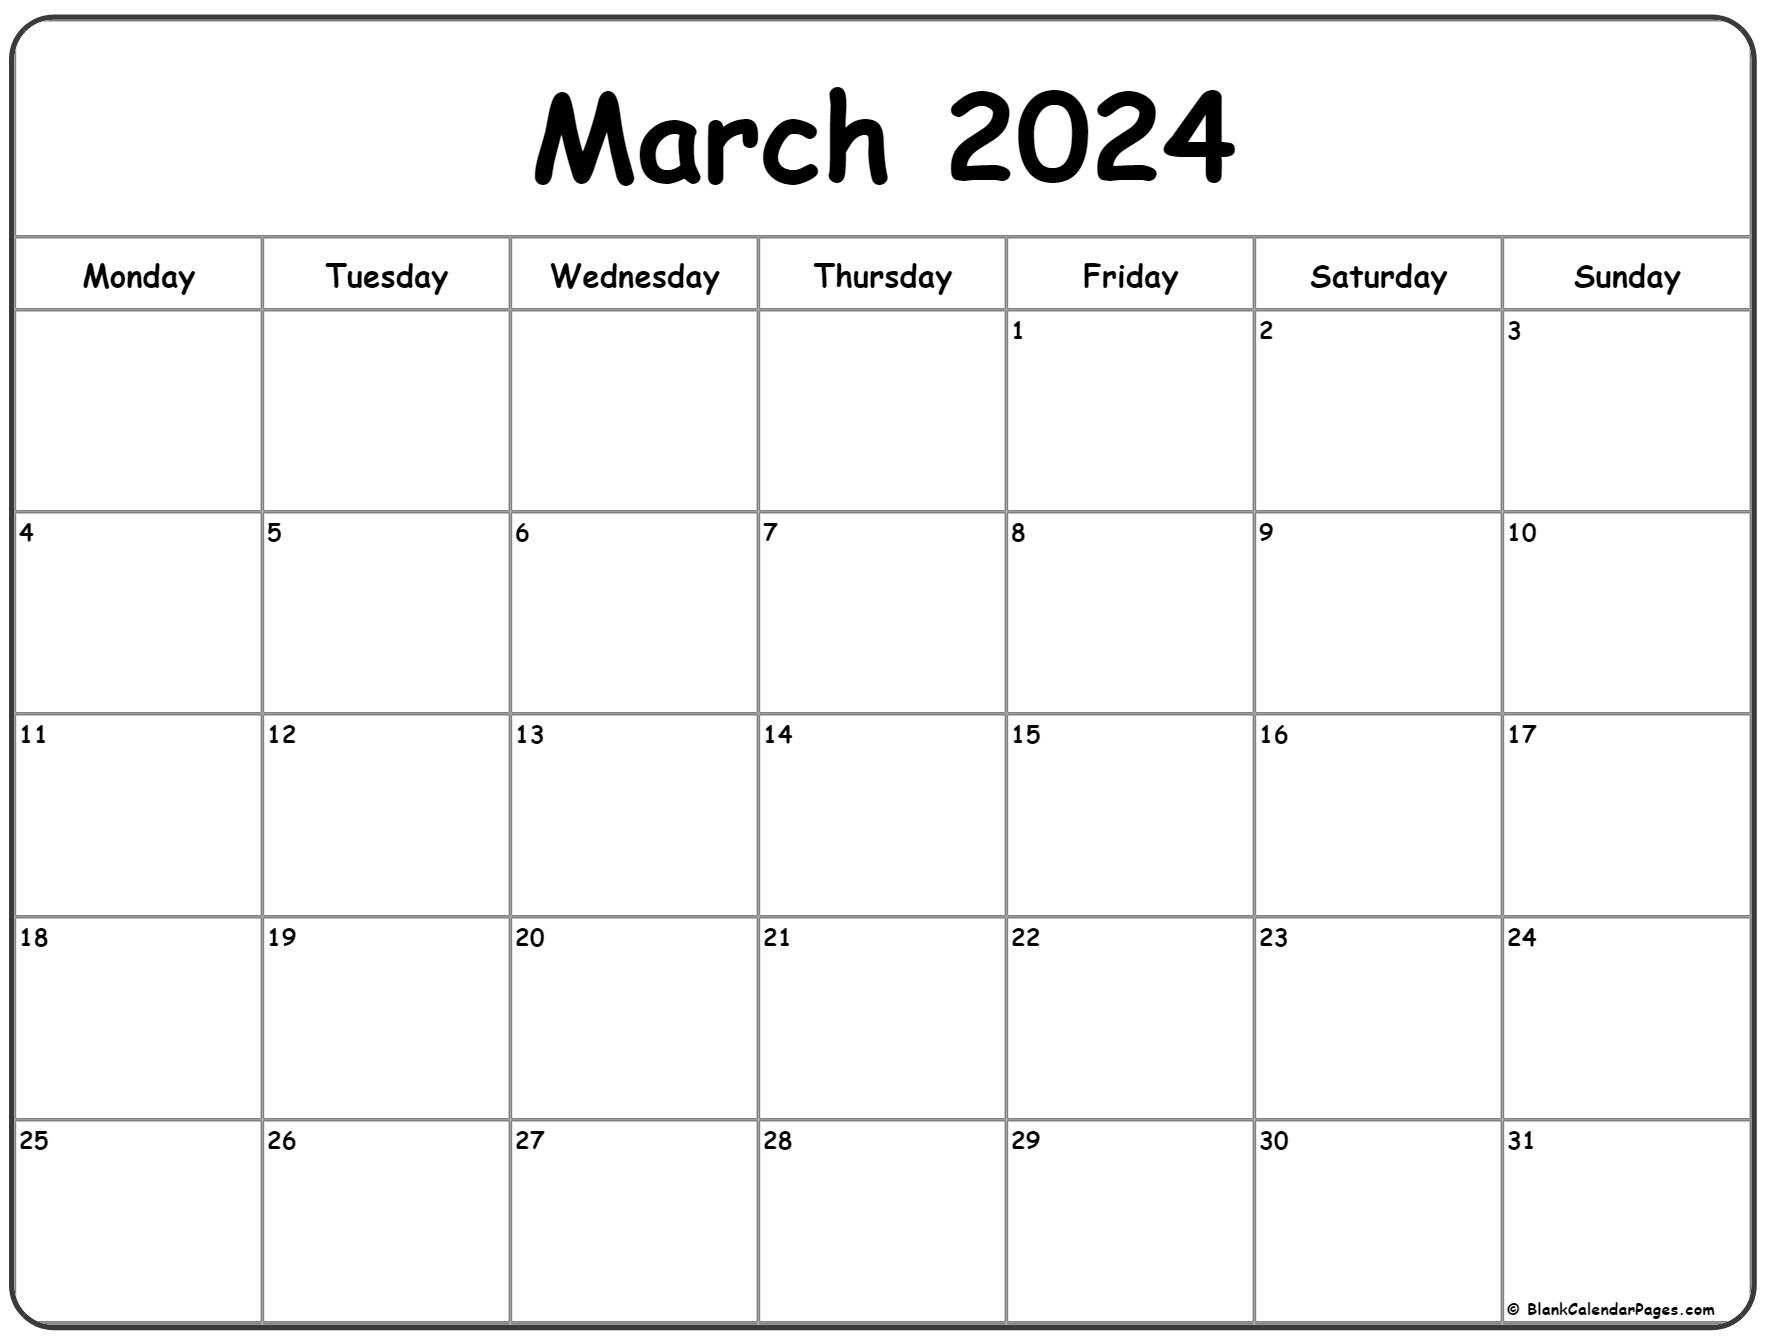 Blank March 2021 Calendar March 2021 Monday Calendar | Monday to Sunday